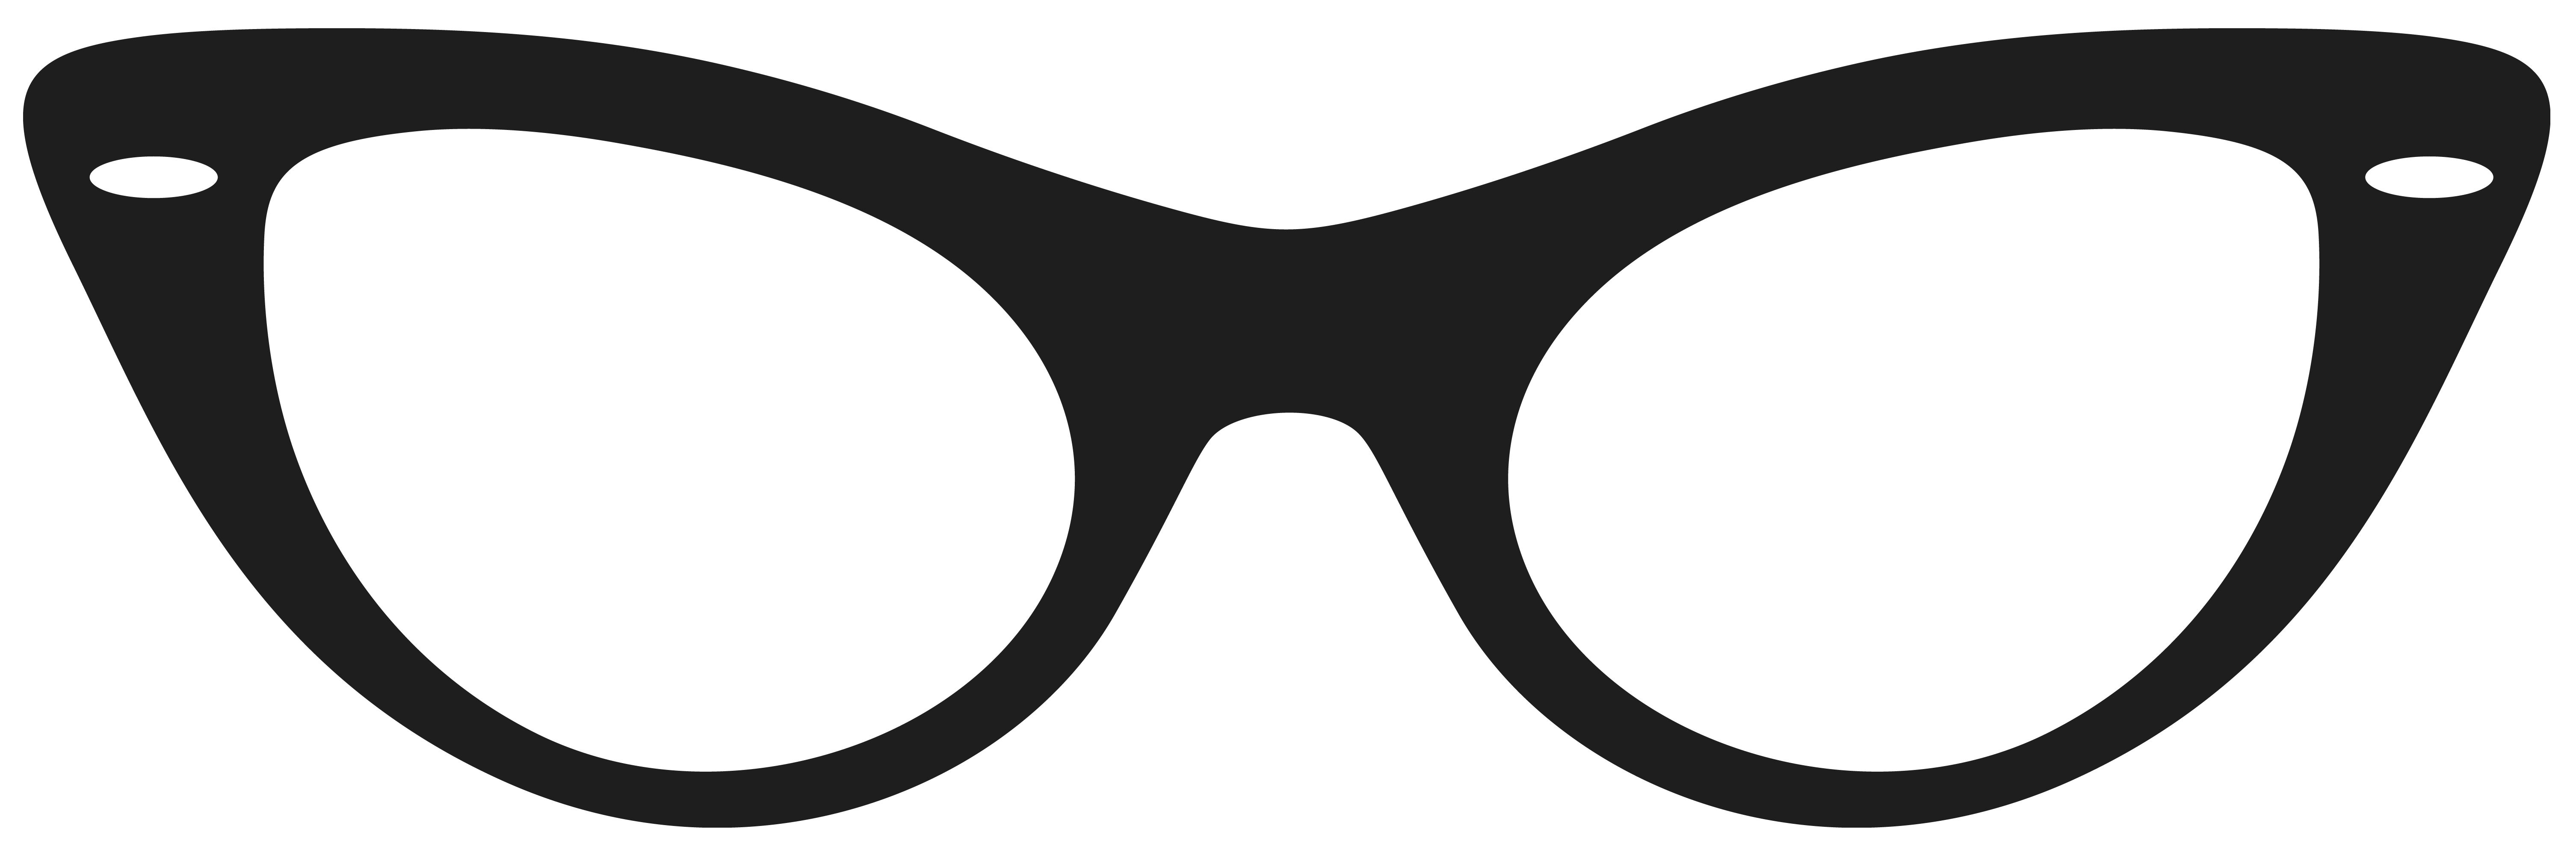 hipster glasses transparent png david simchi levi #10352